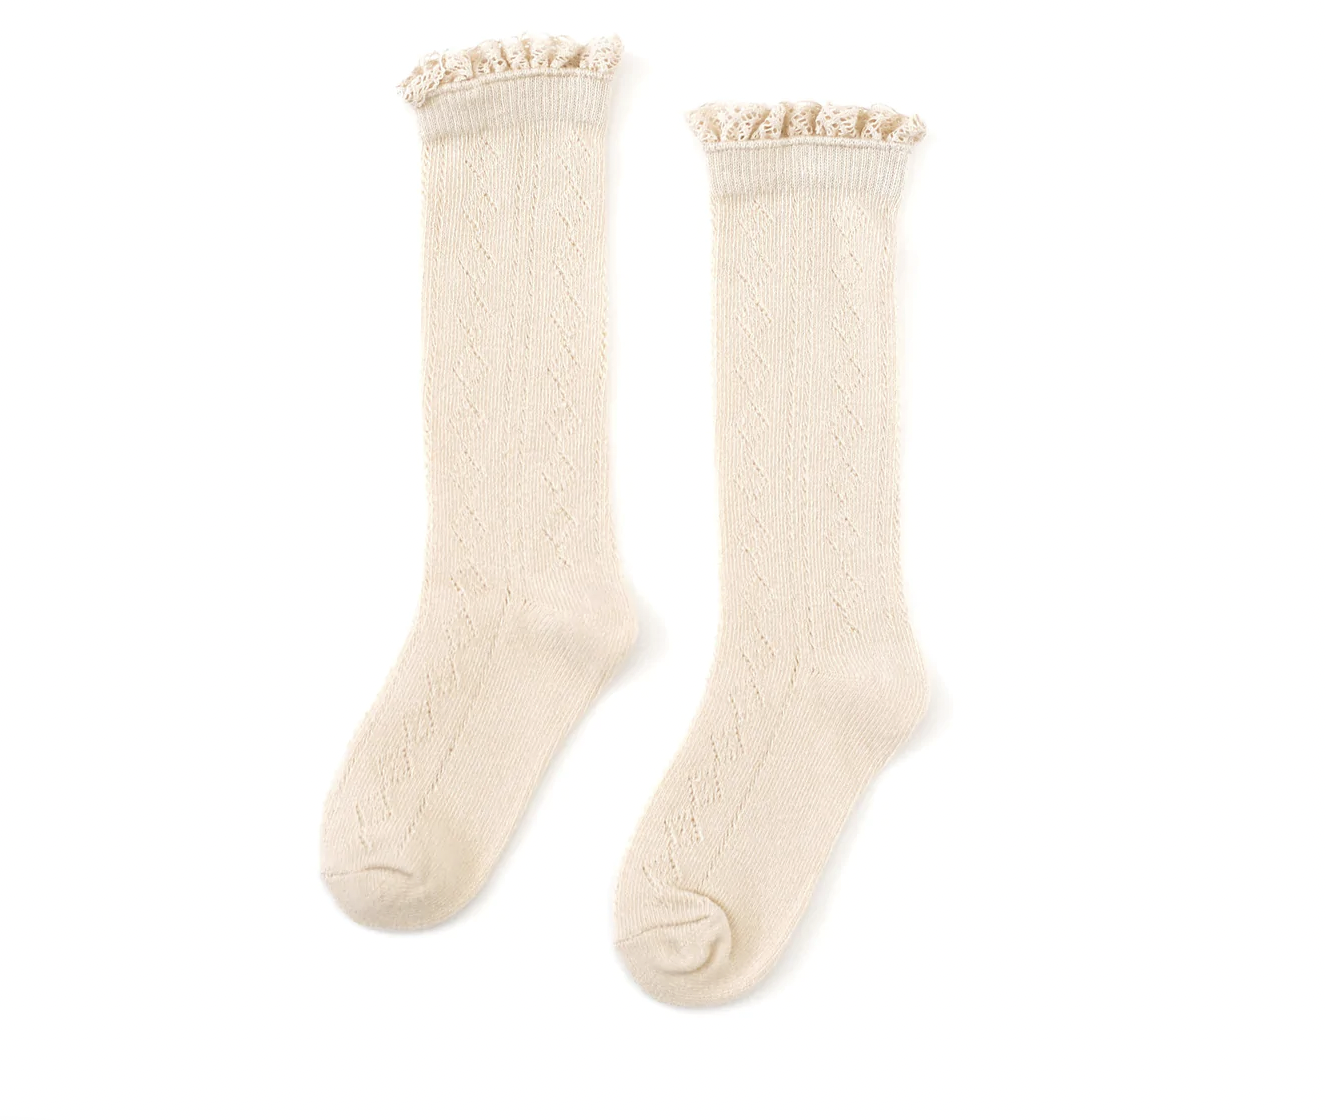 Little Stocking Co. Fancy Lace Top Knee High Socks- Vanilla Lace